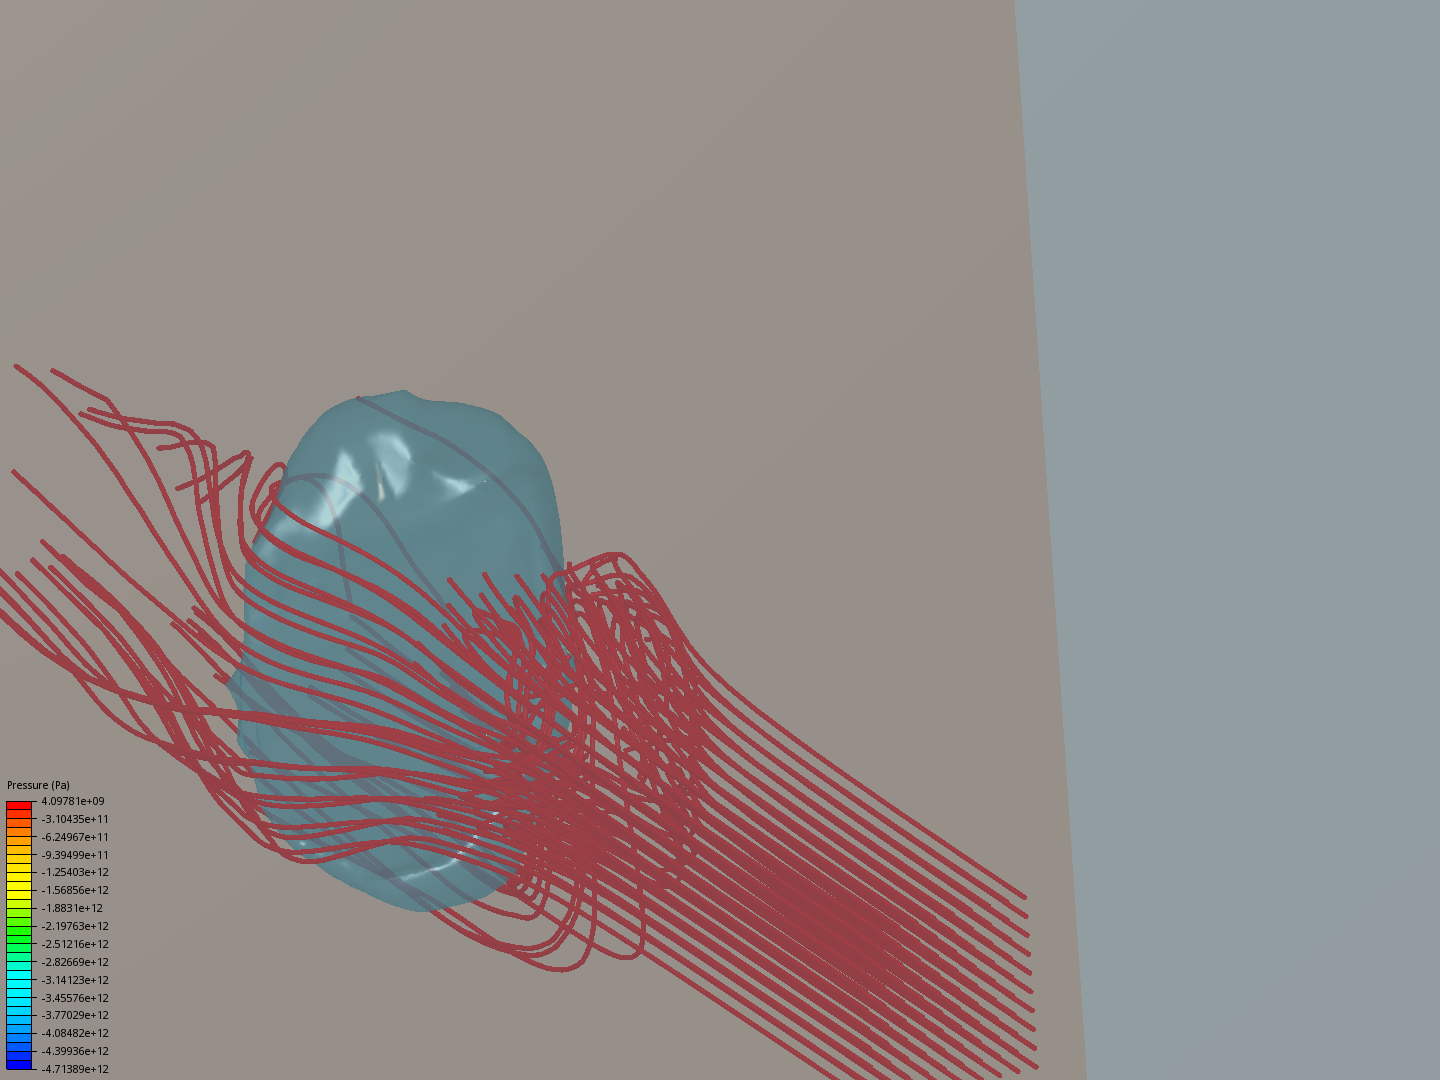 aerodynamics of antons face version 2 image